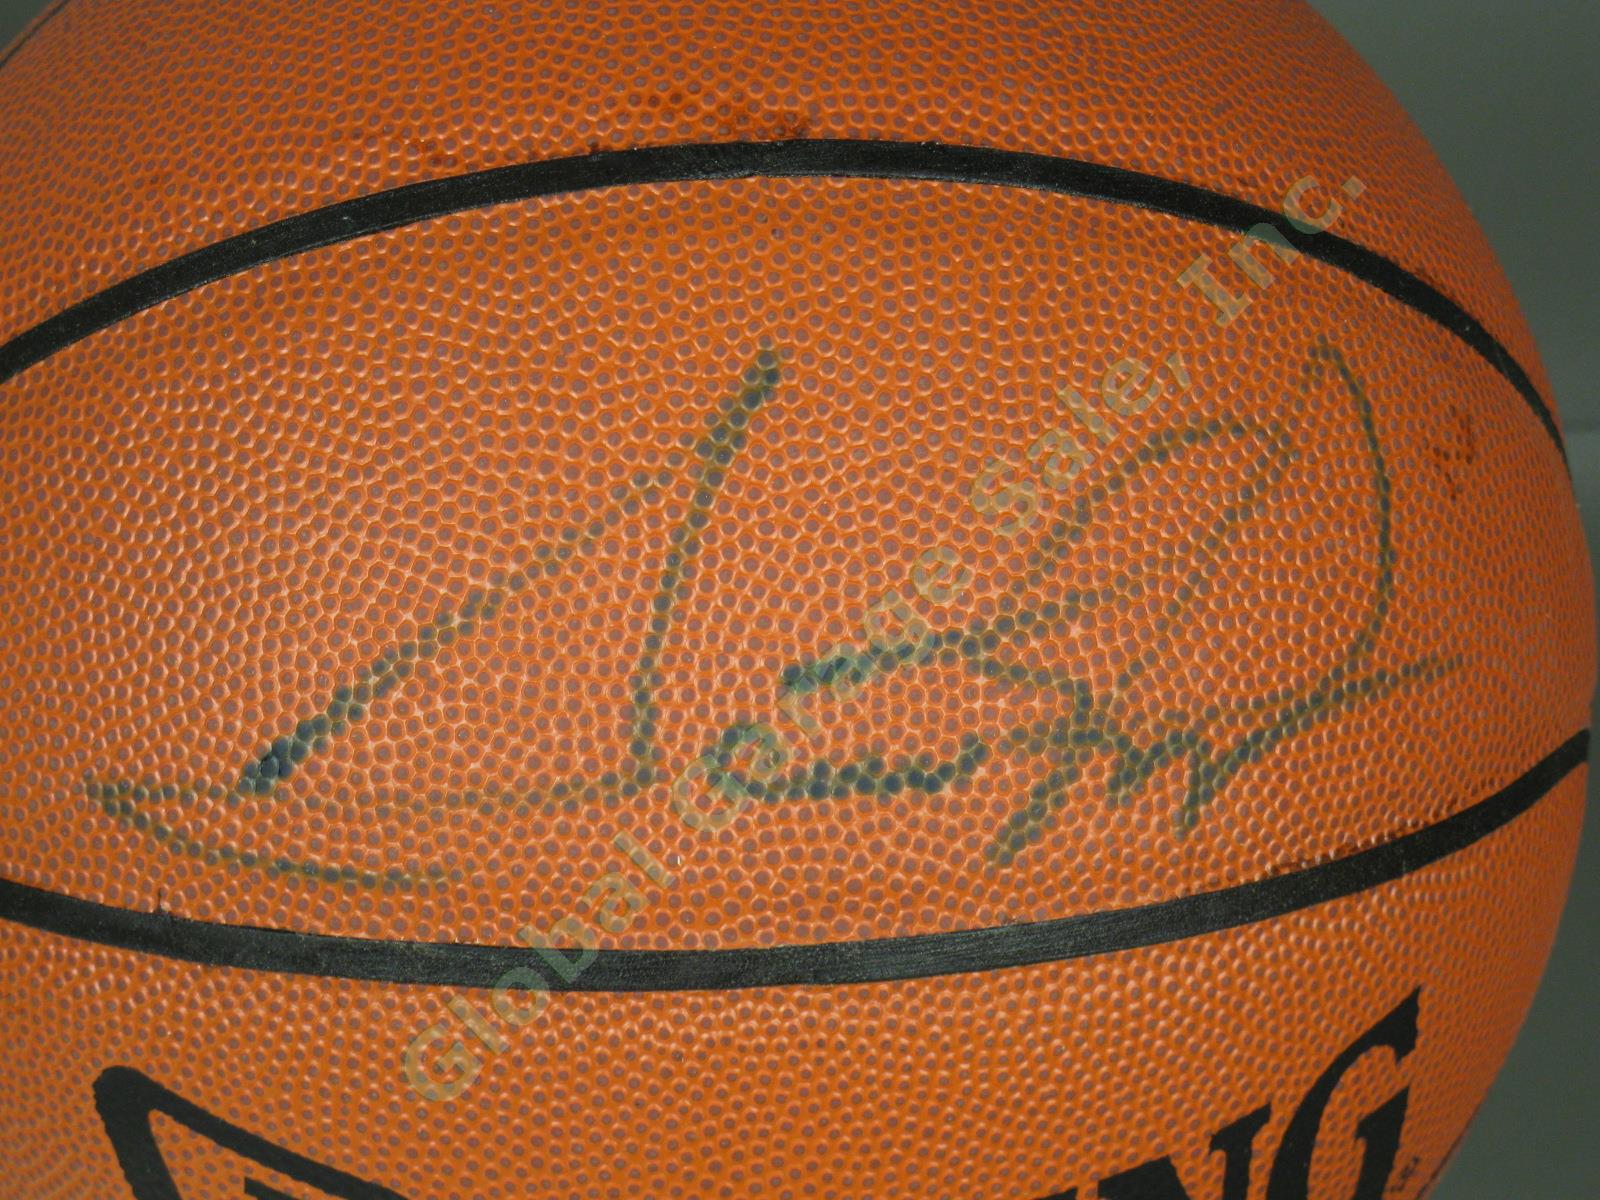 1996 Scottie Pippen Signed Full Size Basketball wCOA Chicago Bulls HOF Autograph 2